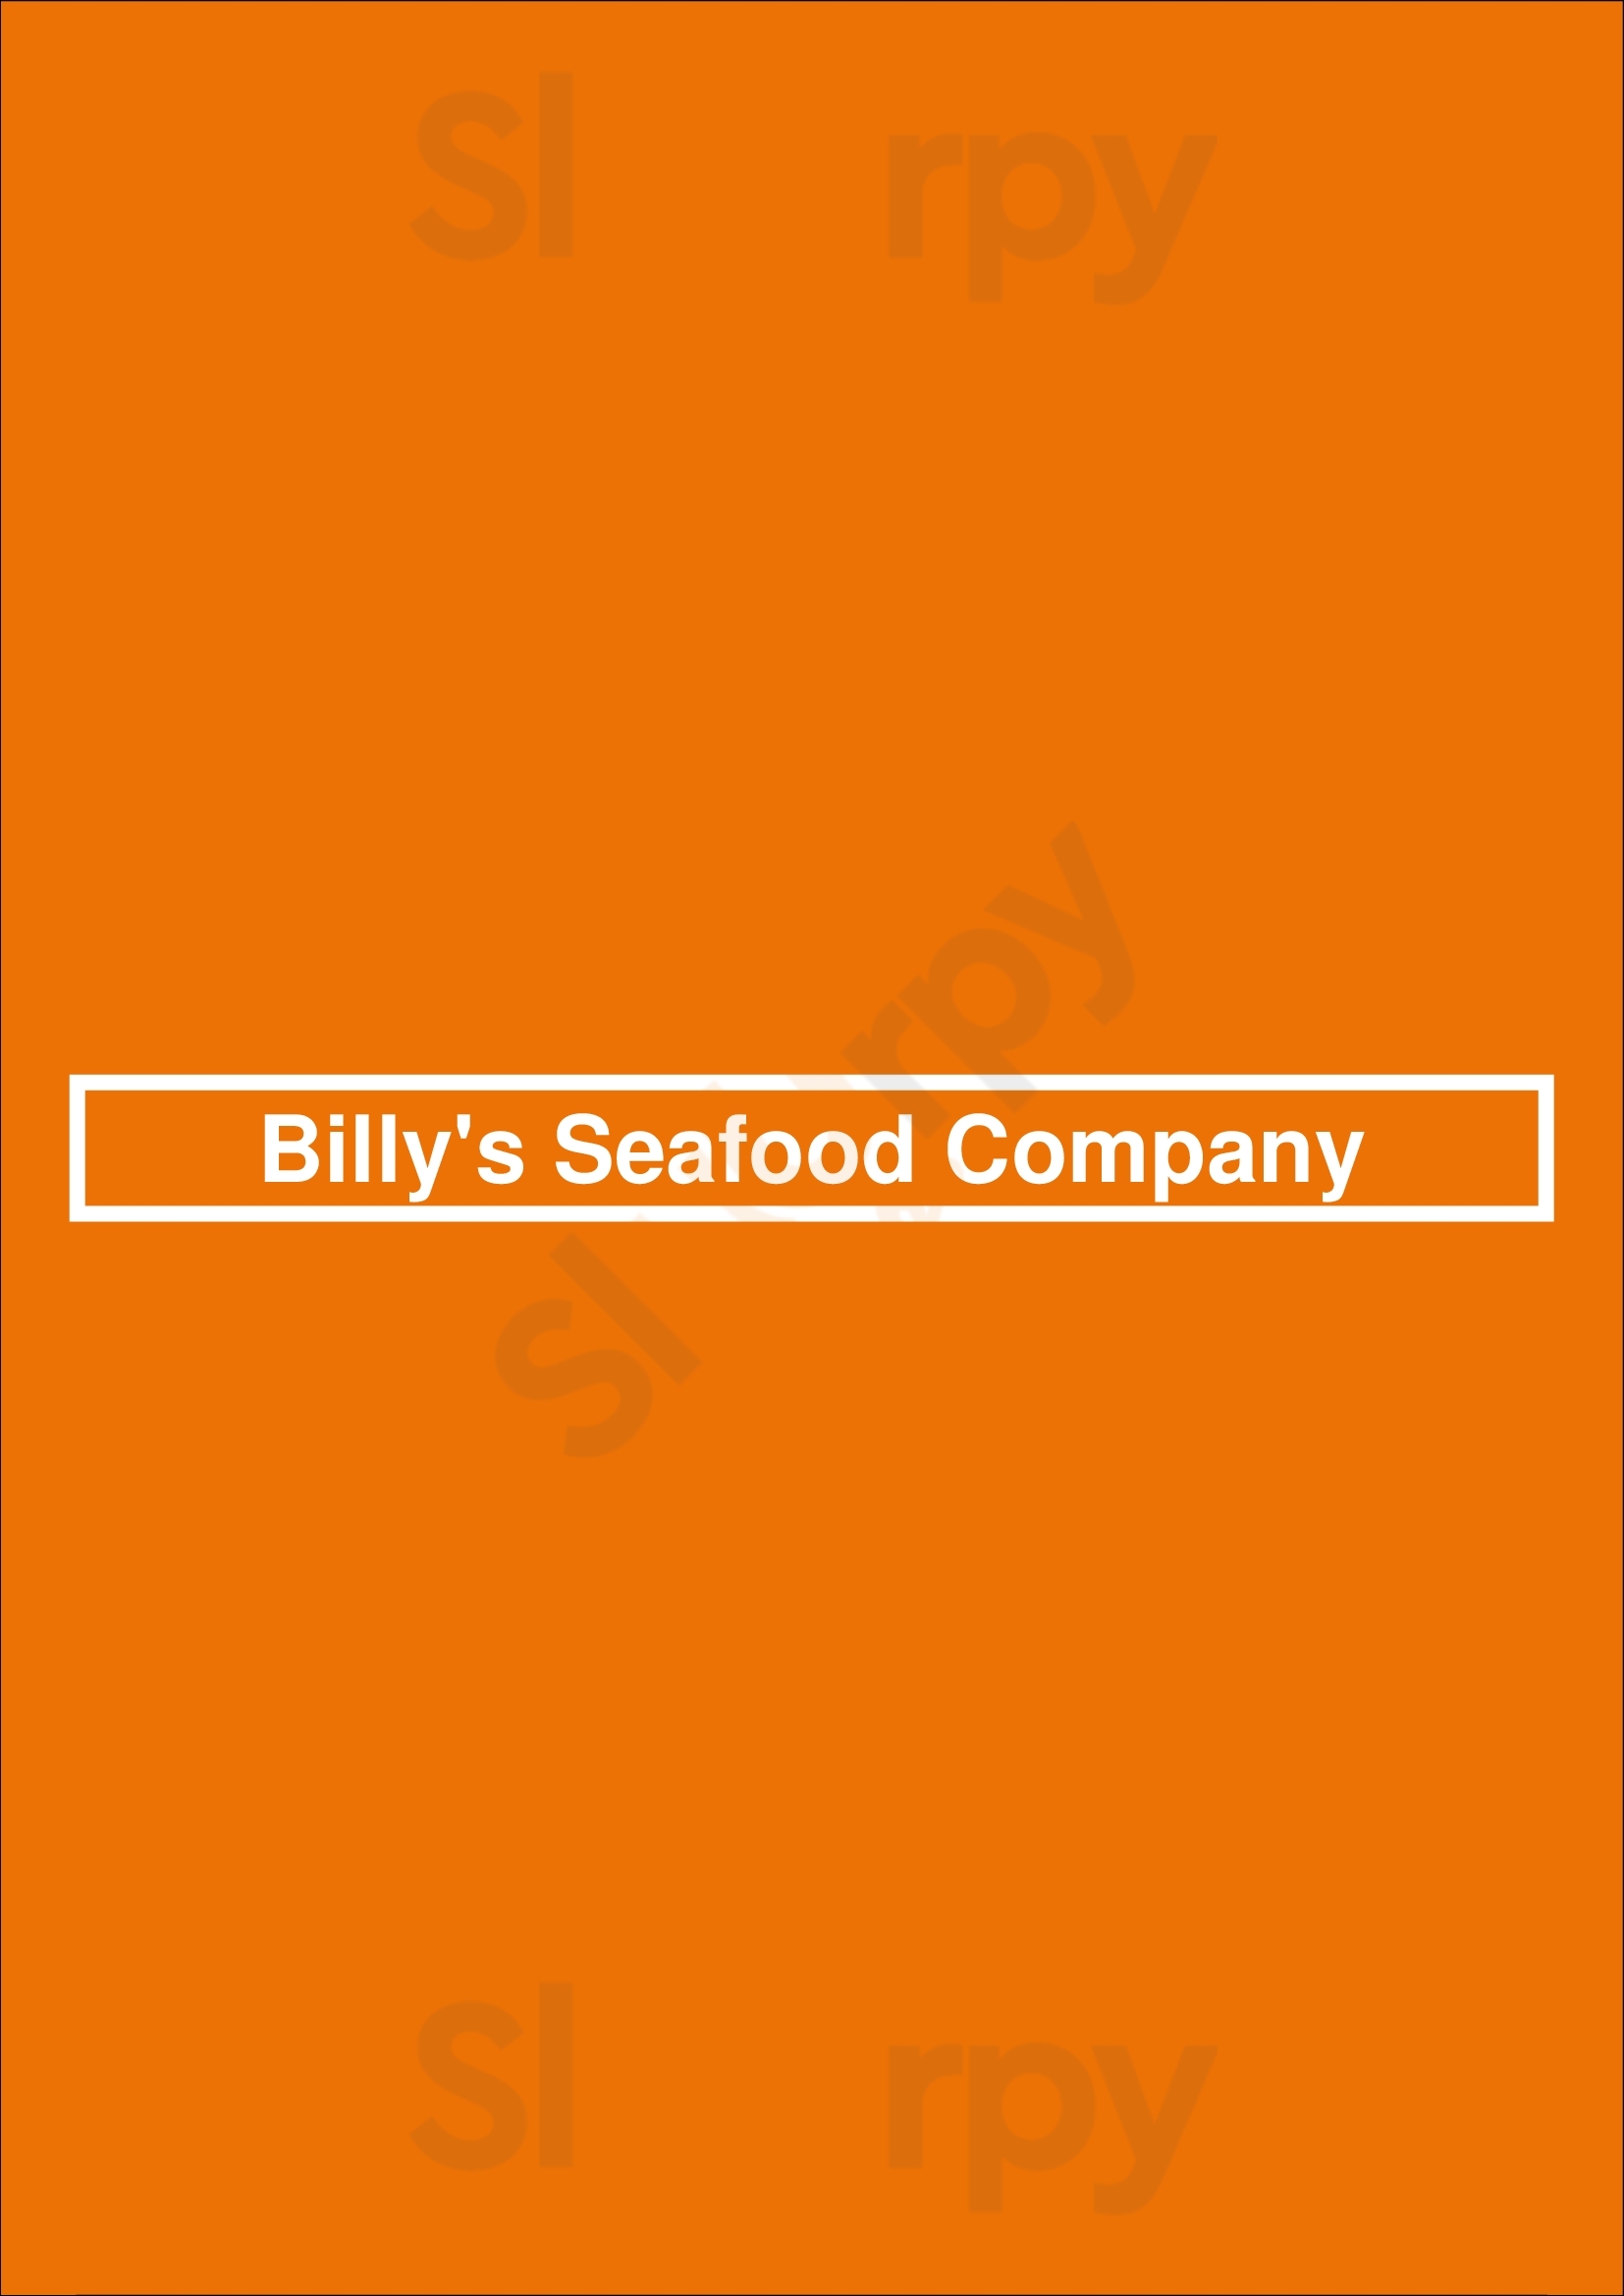 Billy's Seafood Company Saint John Menu - 1